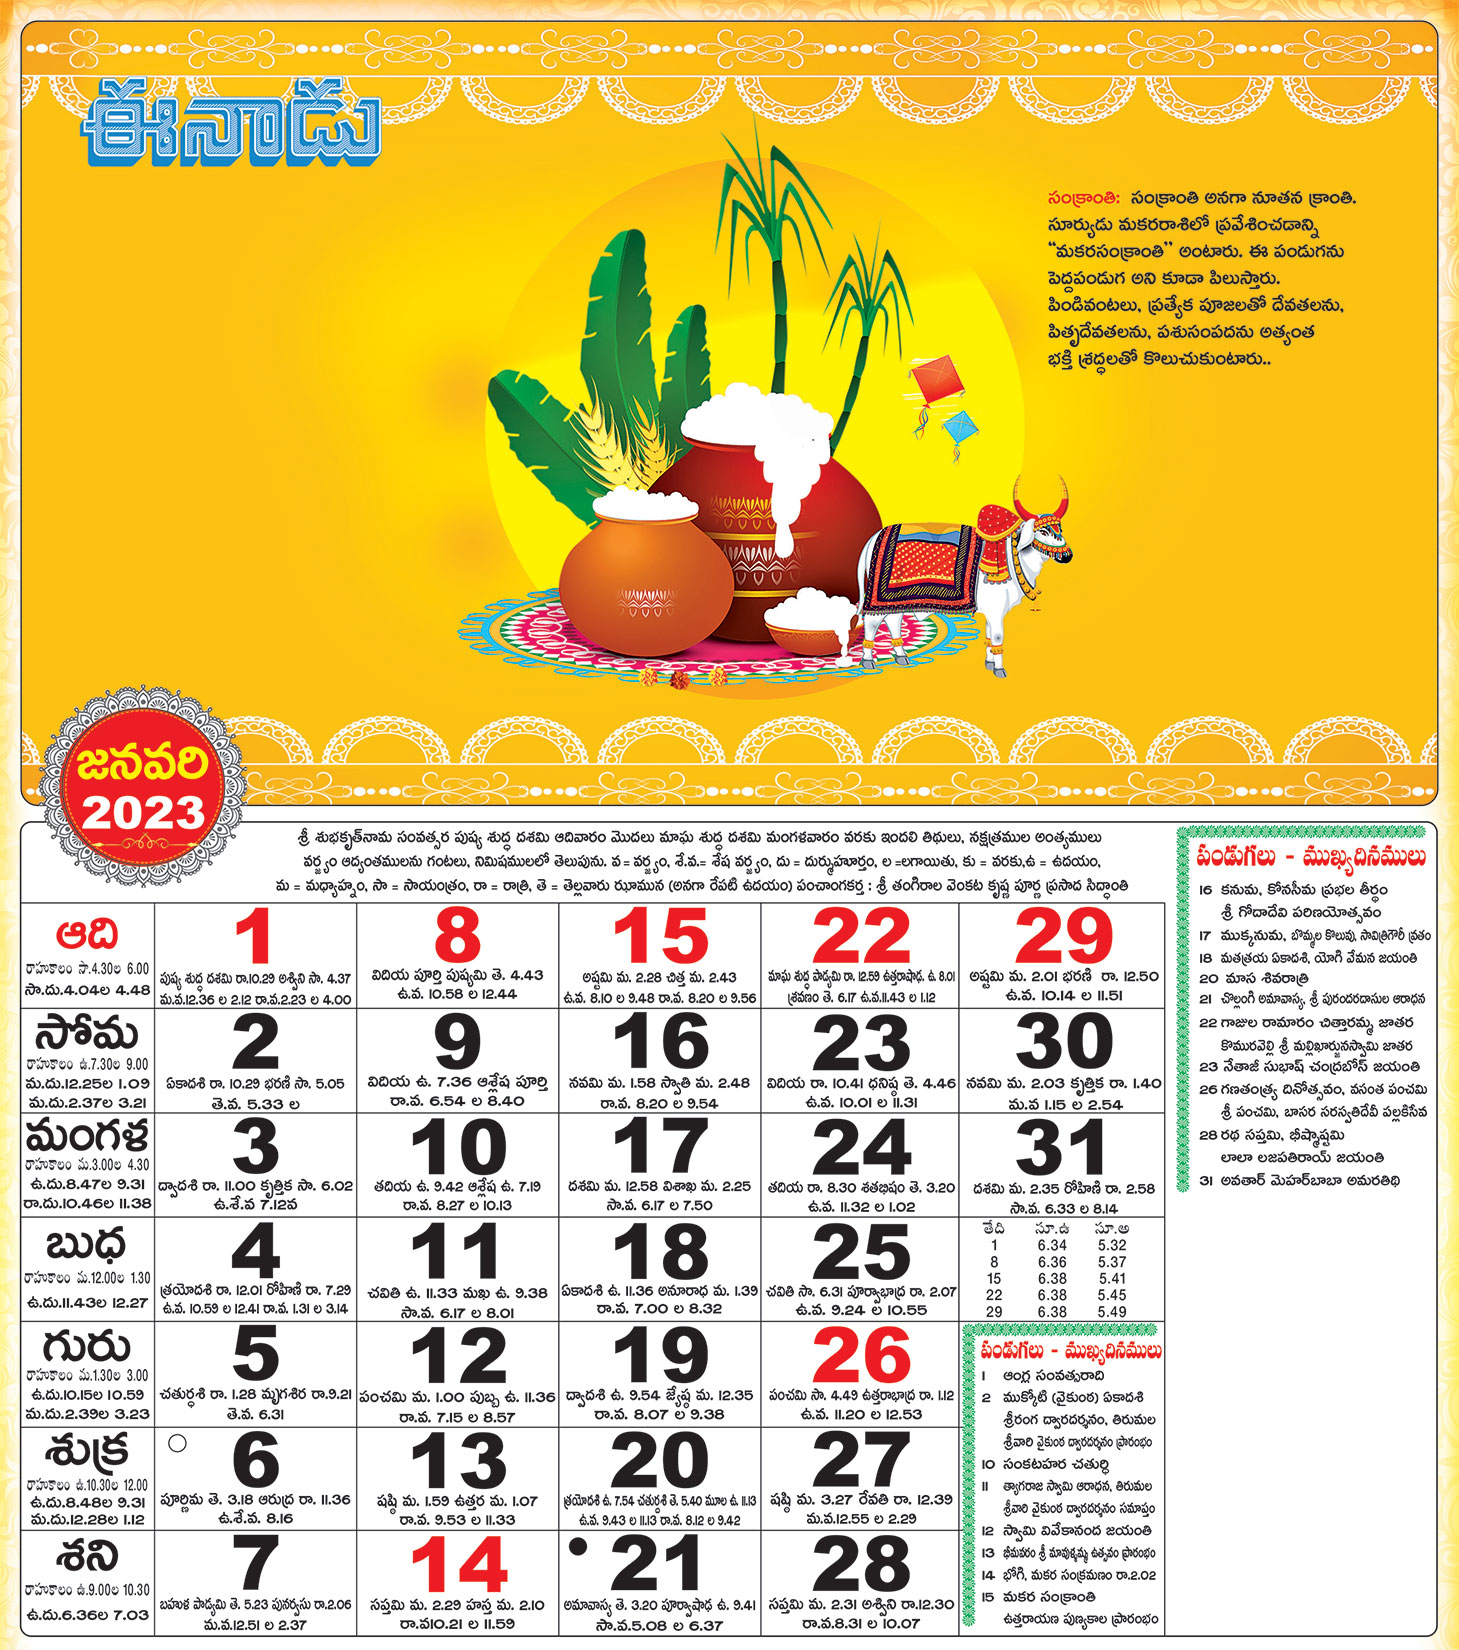 Eenadu january Calendar